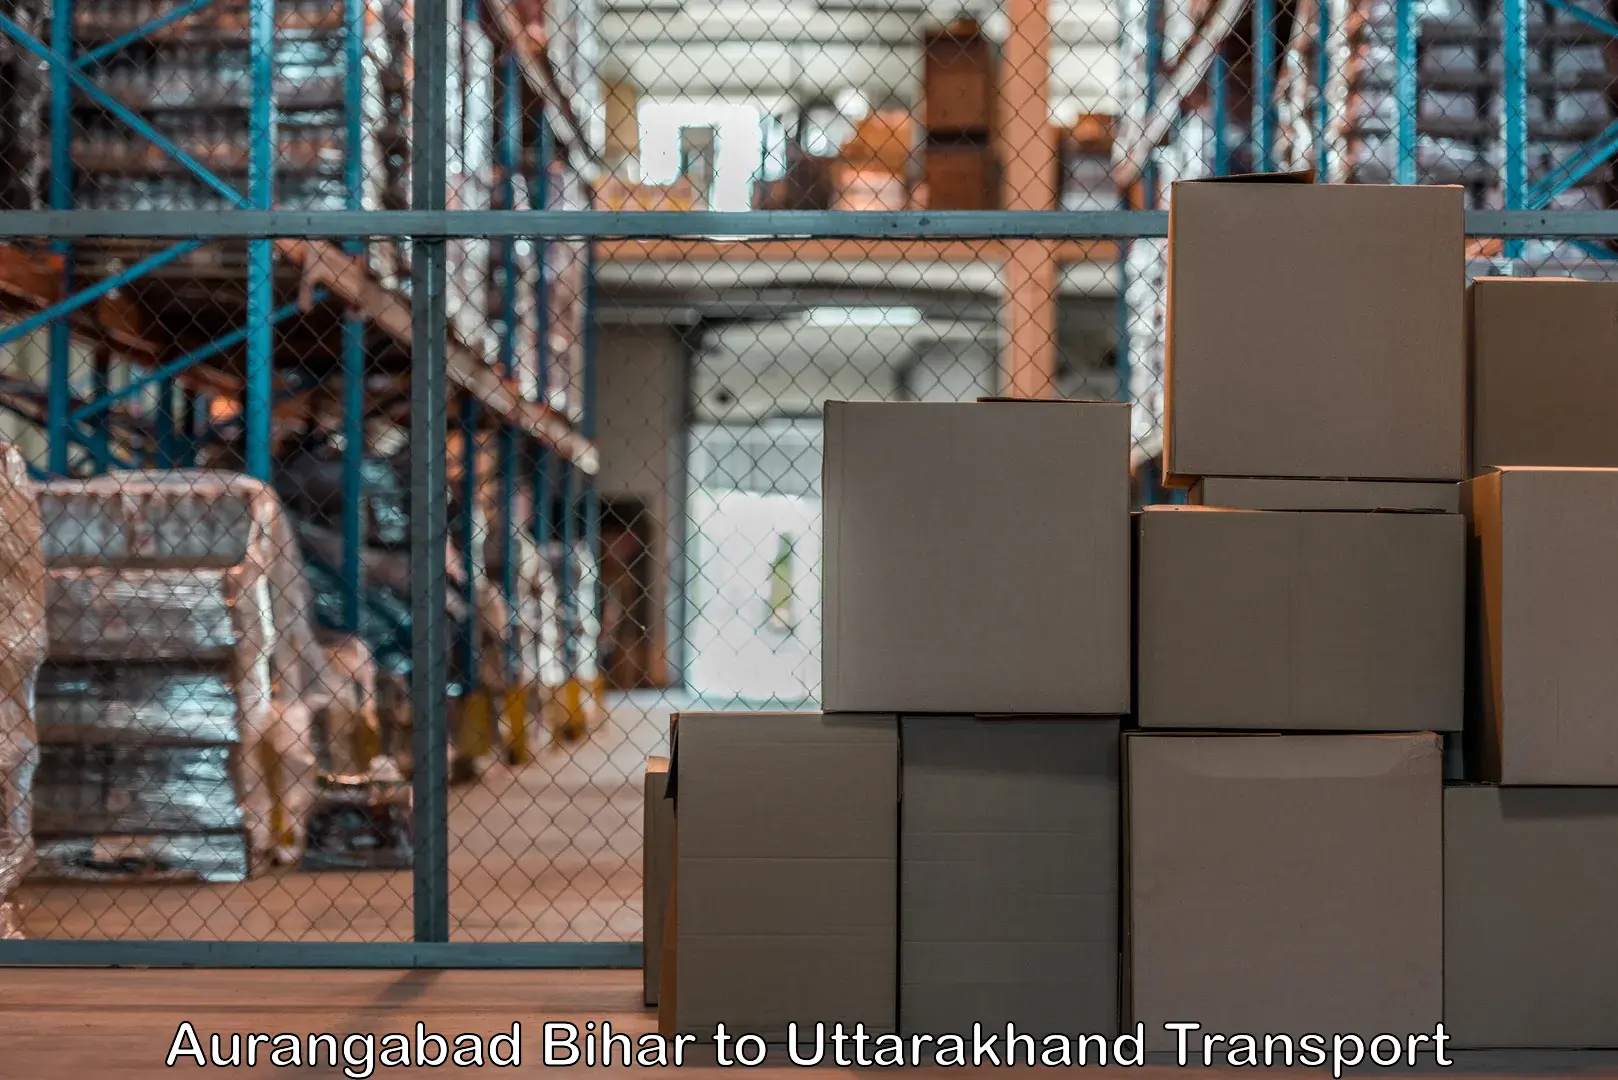 Daily parcel service transport Aurangabad Bihar to Haridwar